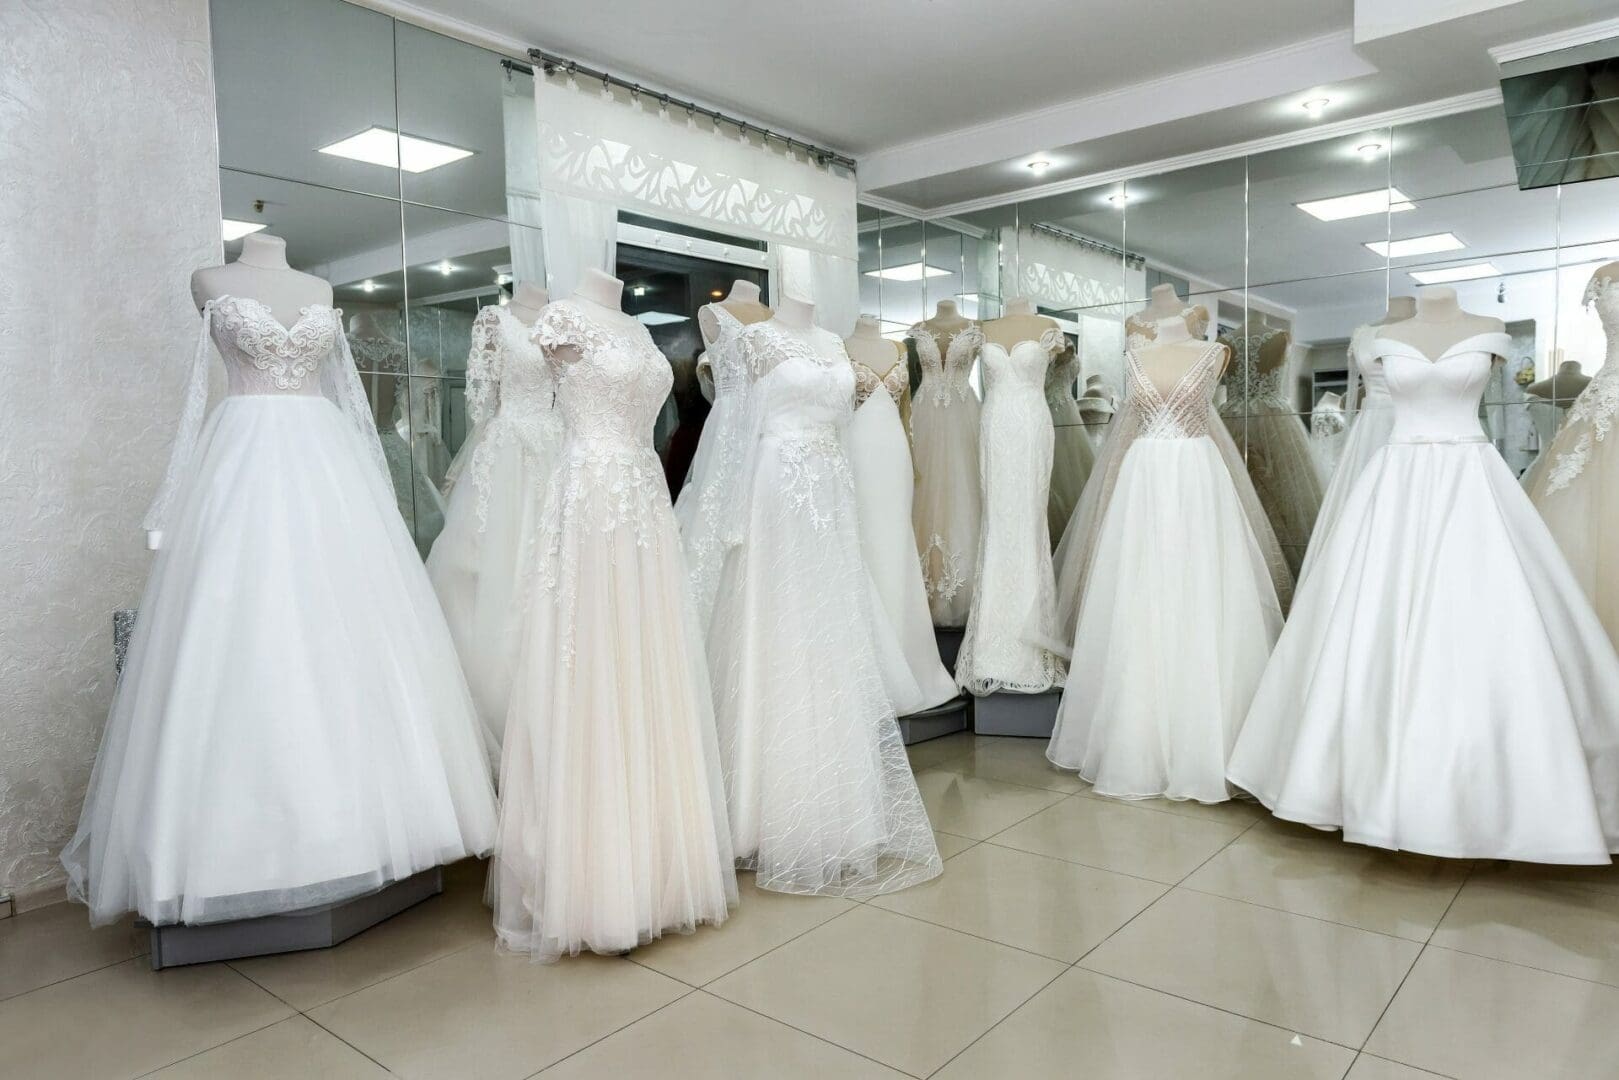 Wedding dresses on display in a bridal shop.